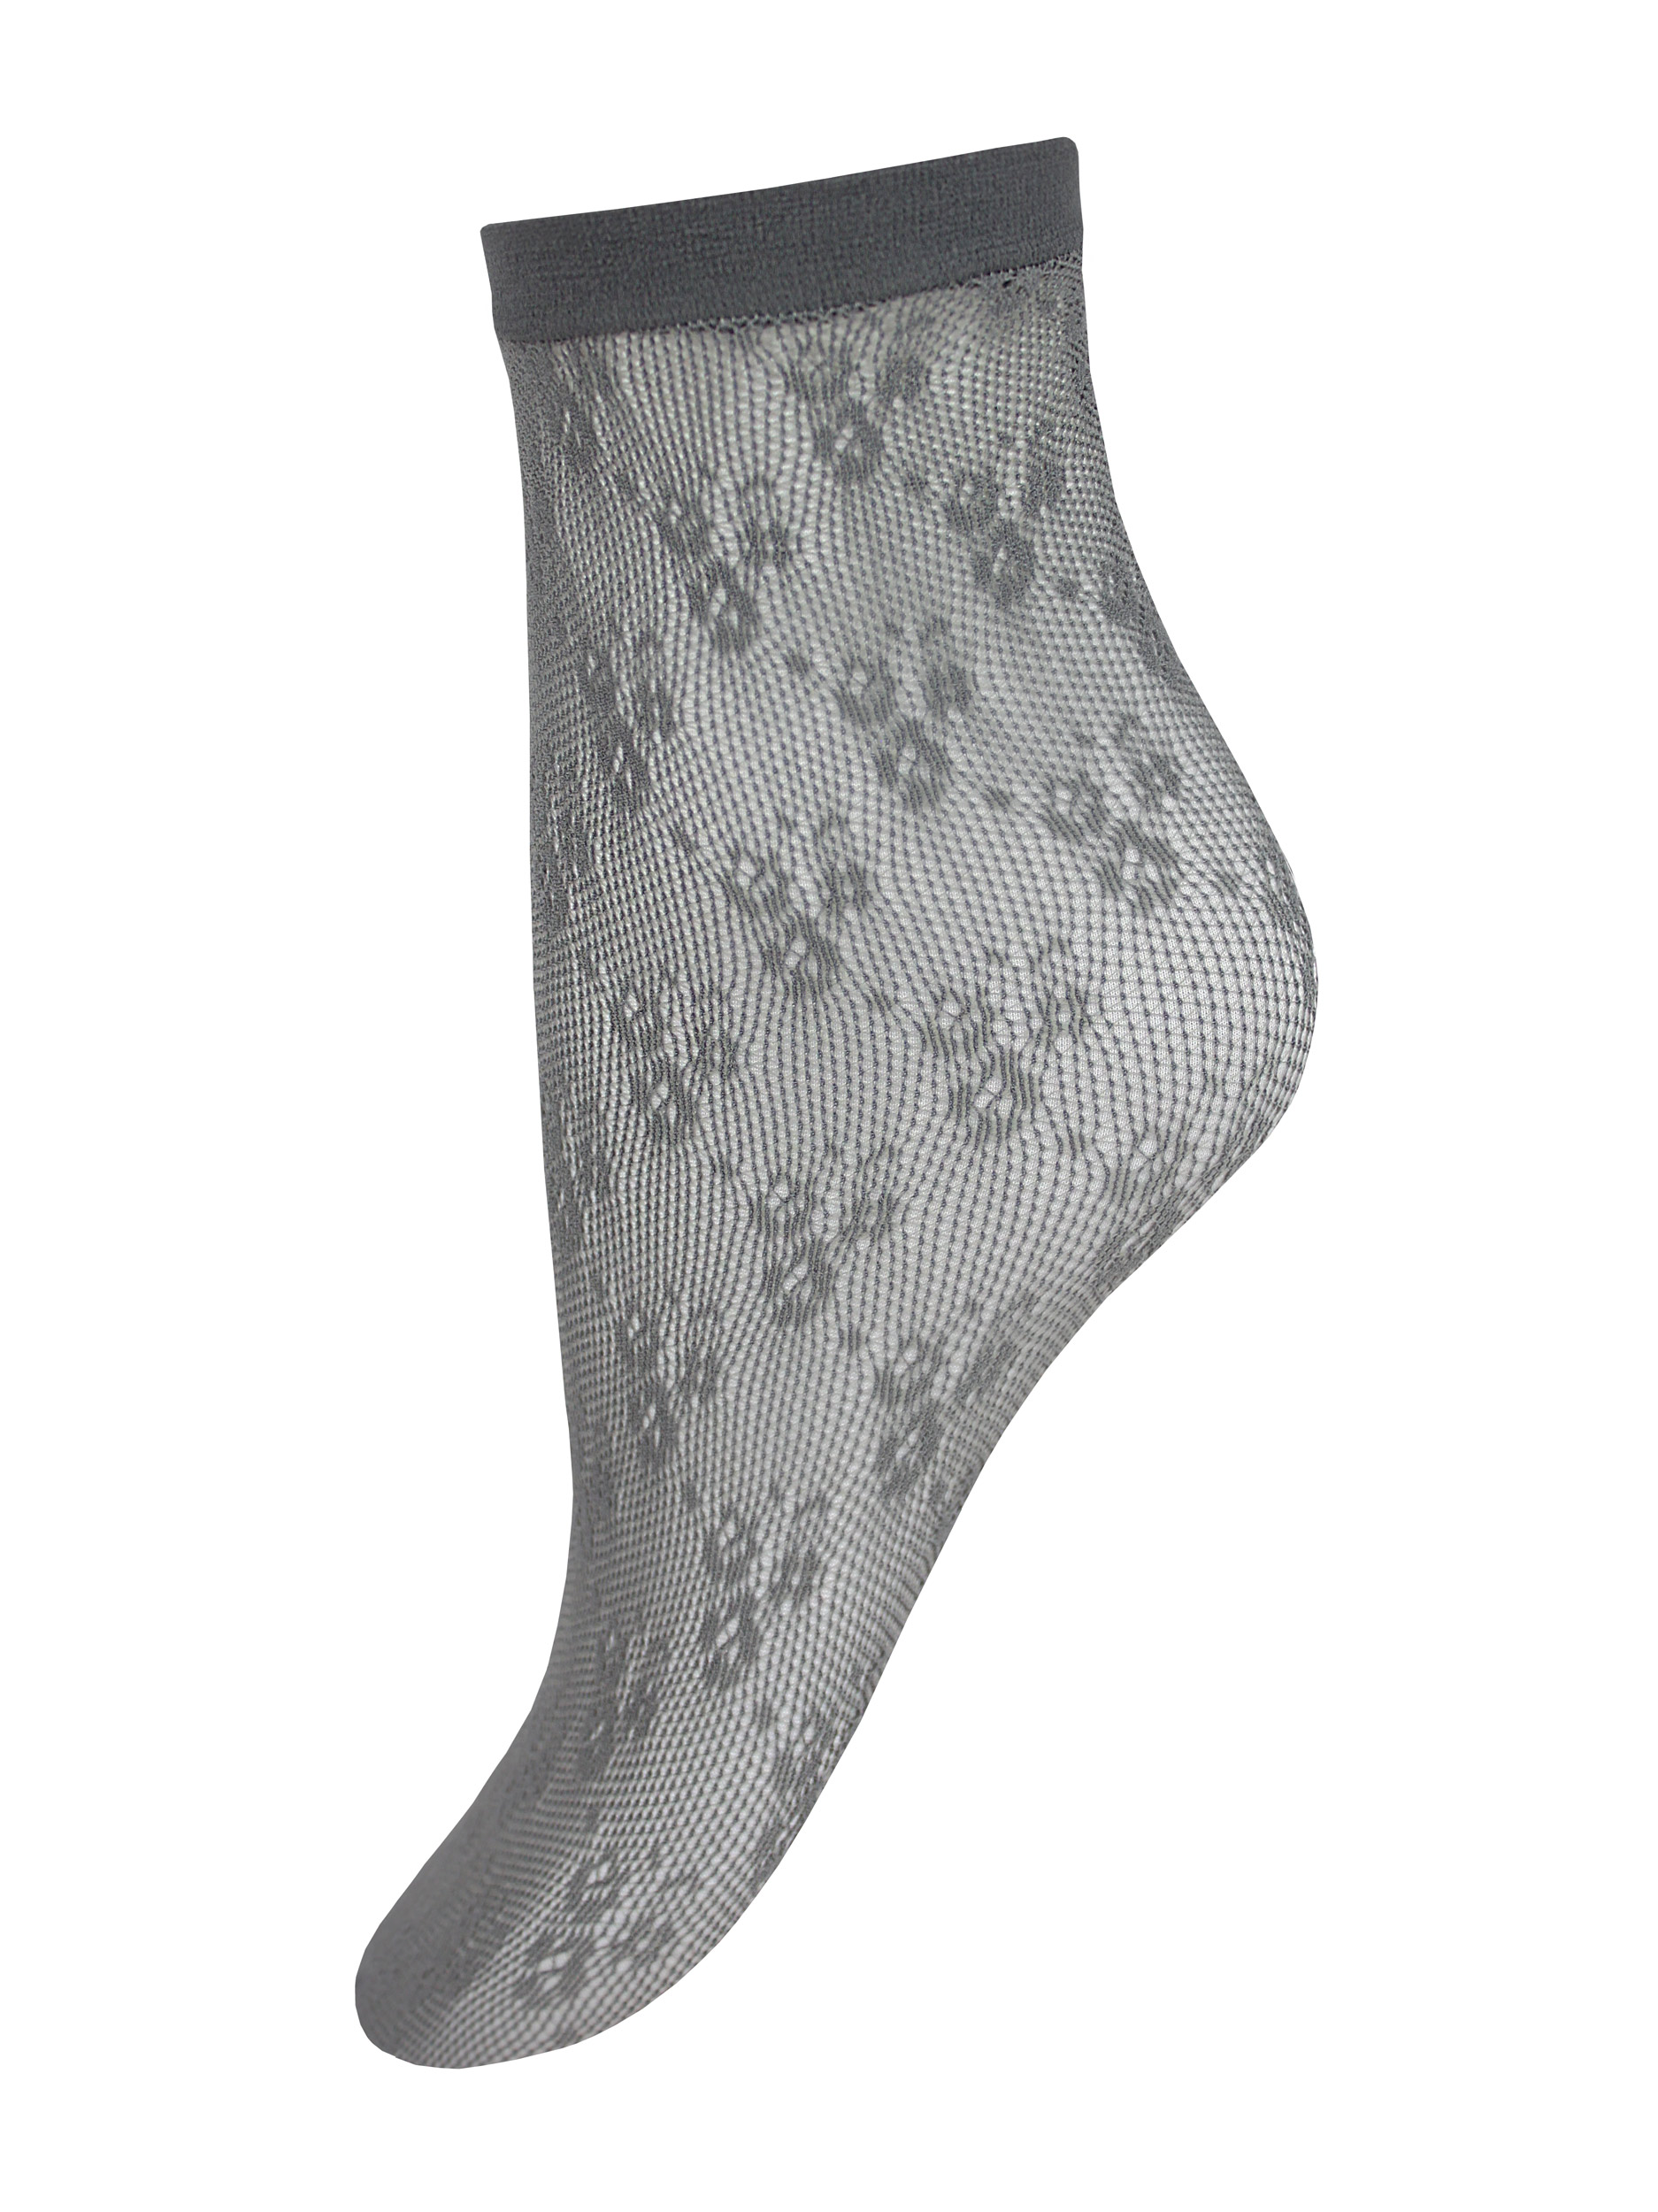 фото Капроновые носки женские mademoiselle trevi (c.) uni lapin (светло-серые)